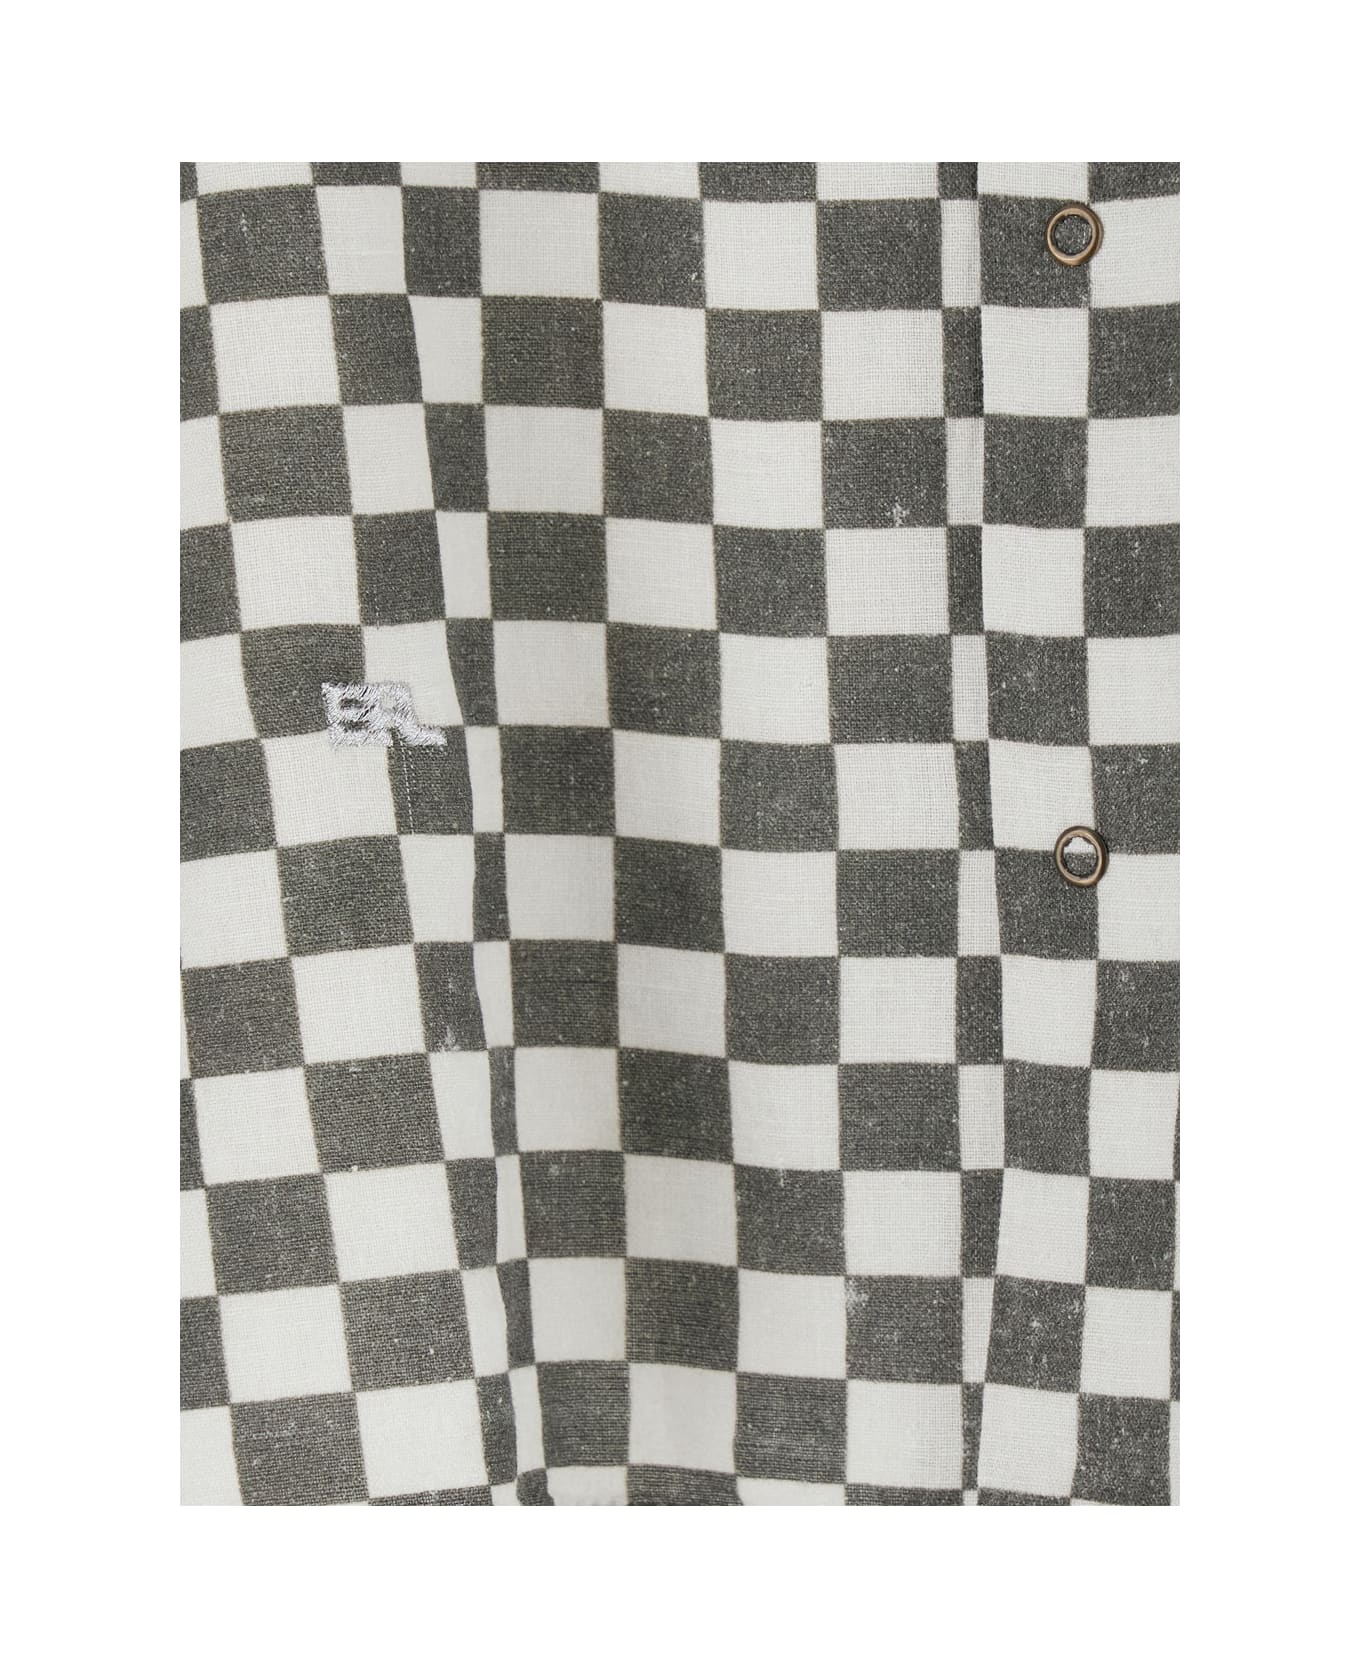 ERL Check Pattern Short-sleeved Shirt - Checker